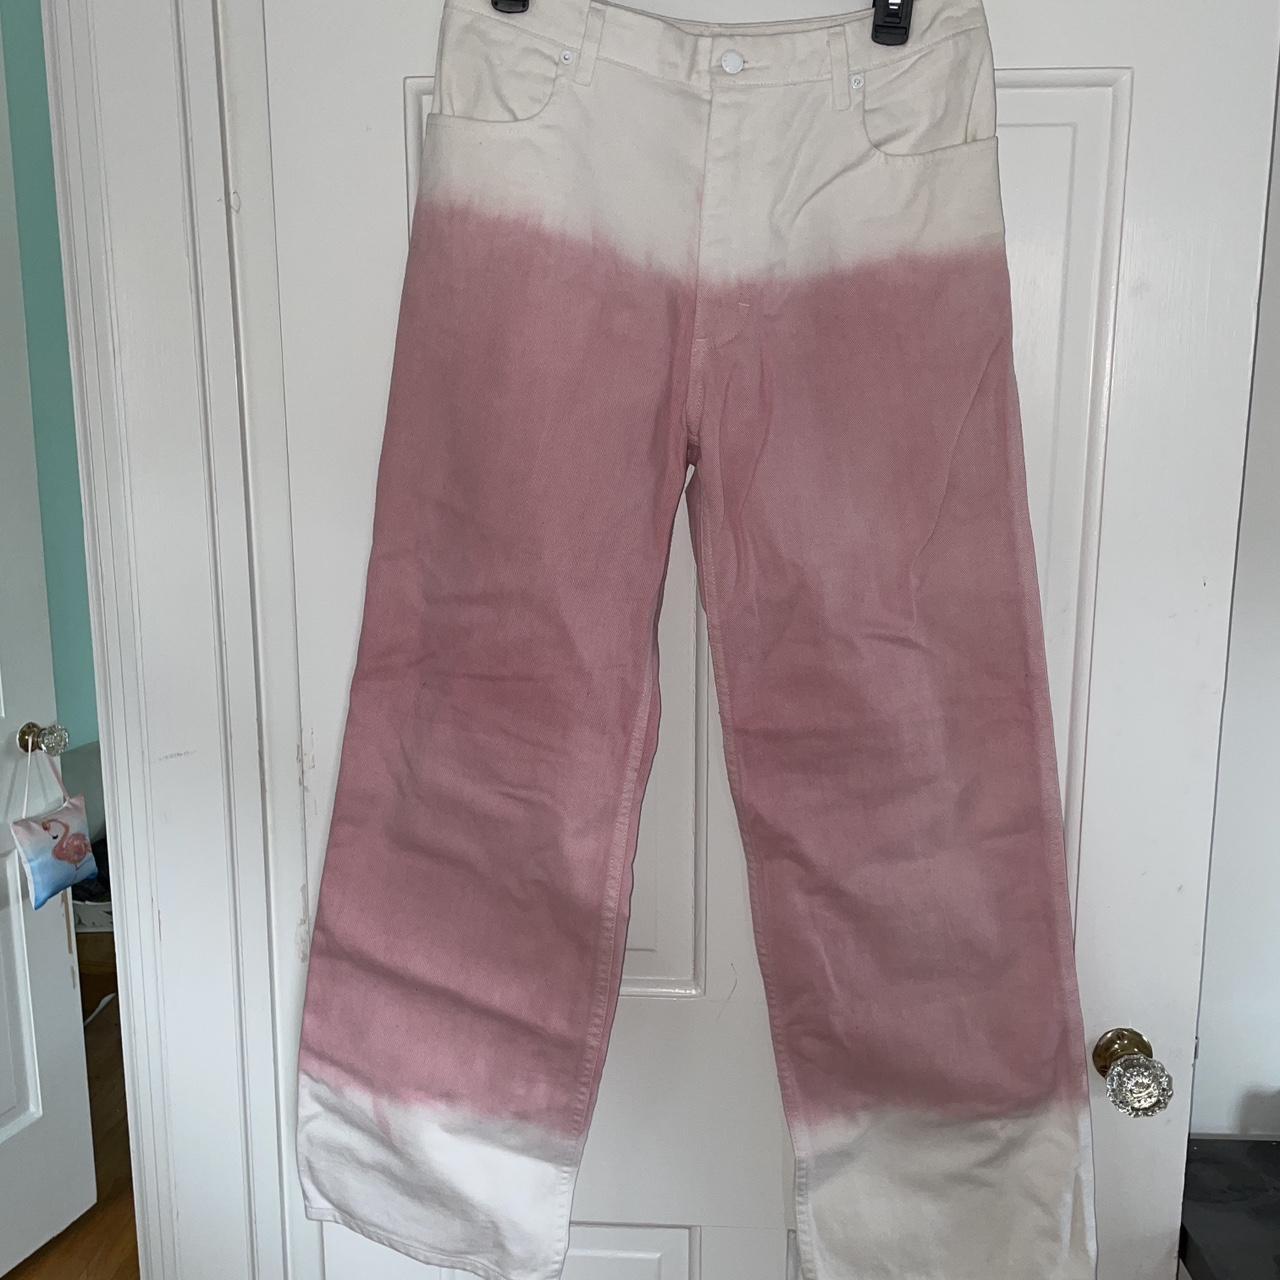 Eckhaus Latta Men's White and Pink Jeans